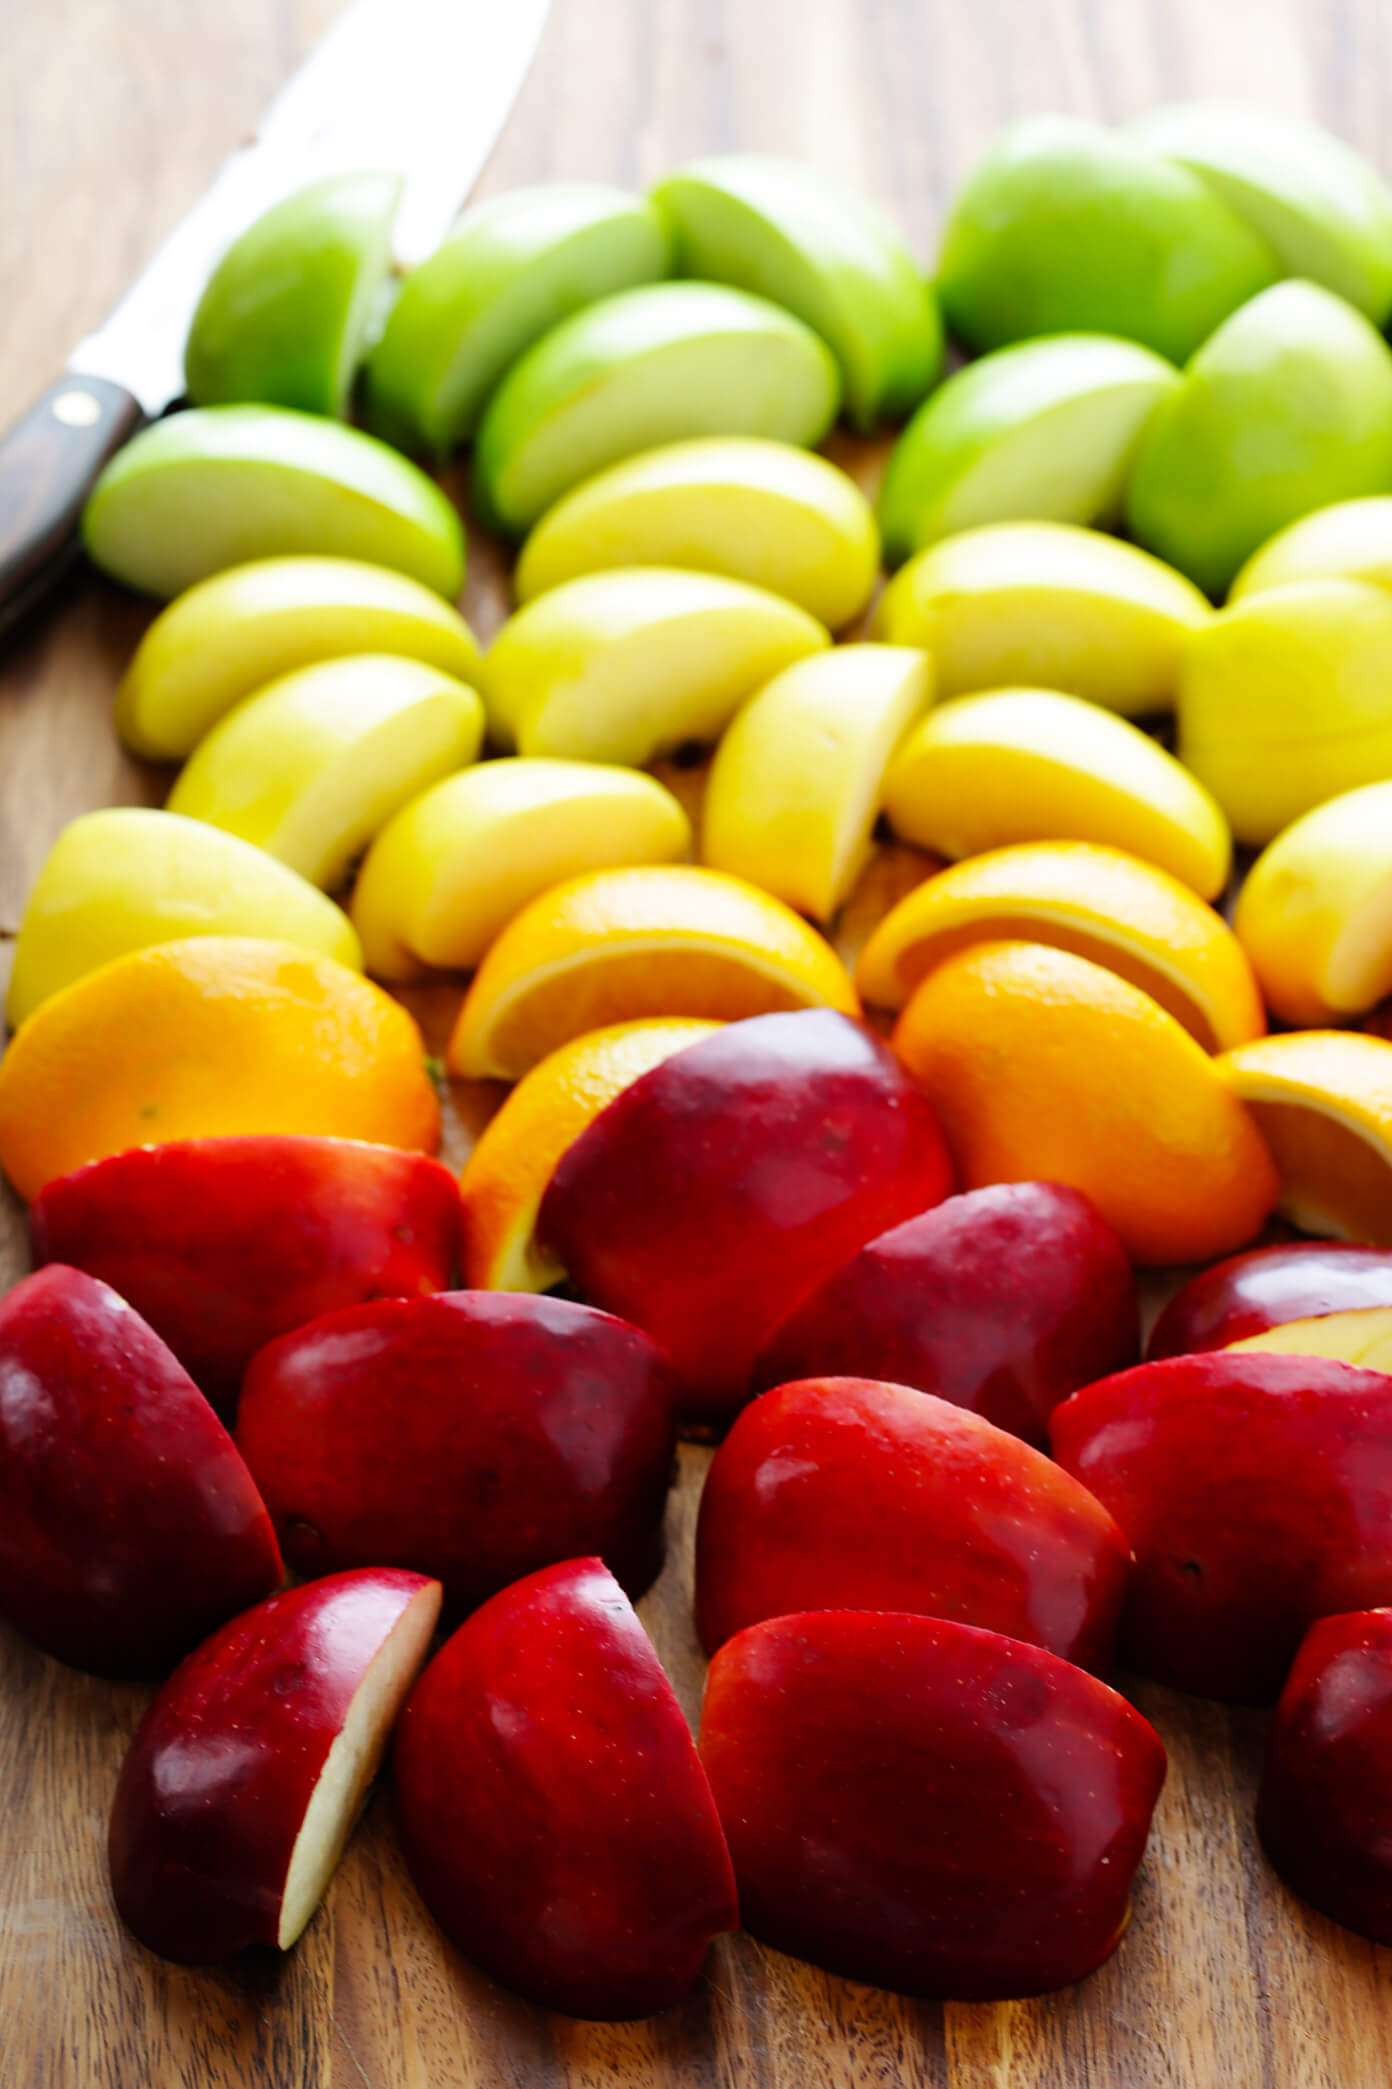 Rainbow of Apples and Oranges | Homemade Apple Cider Recipe